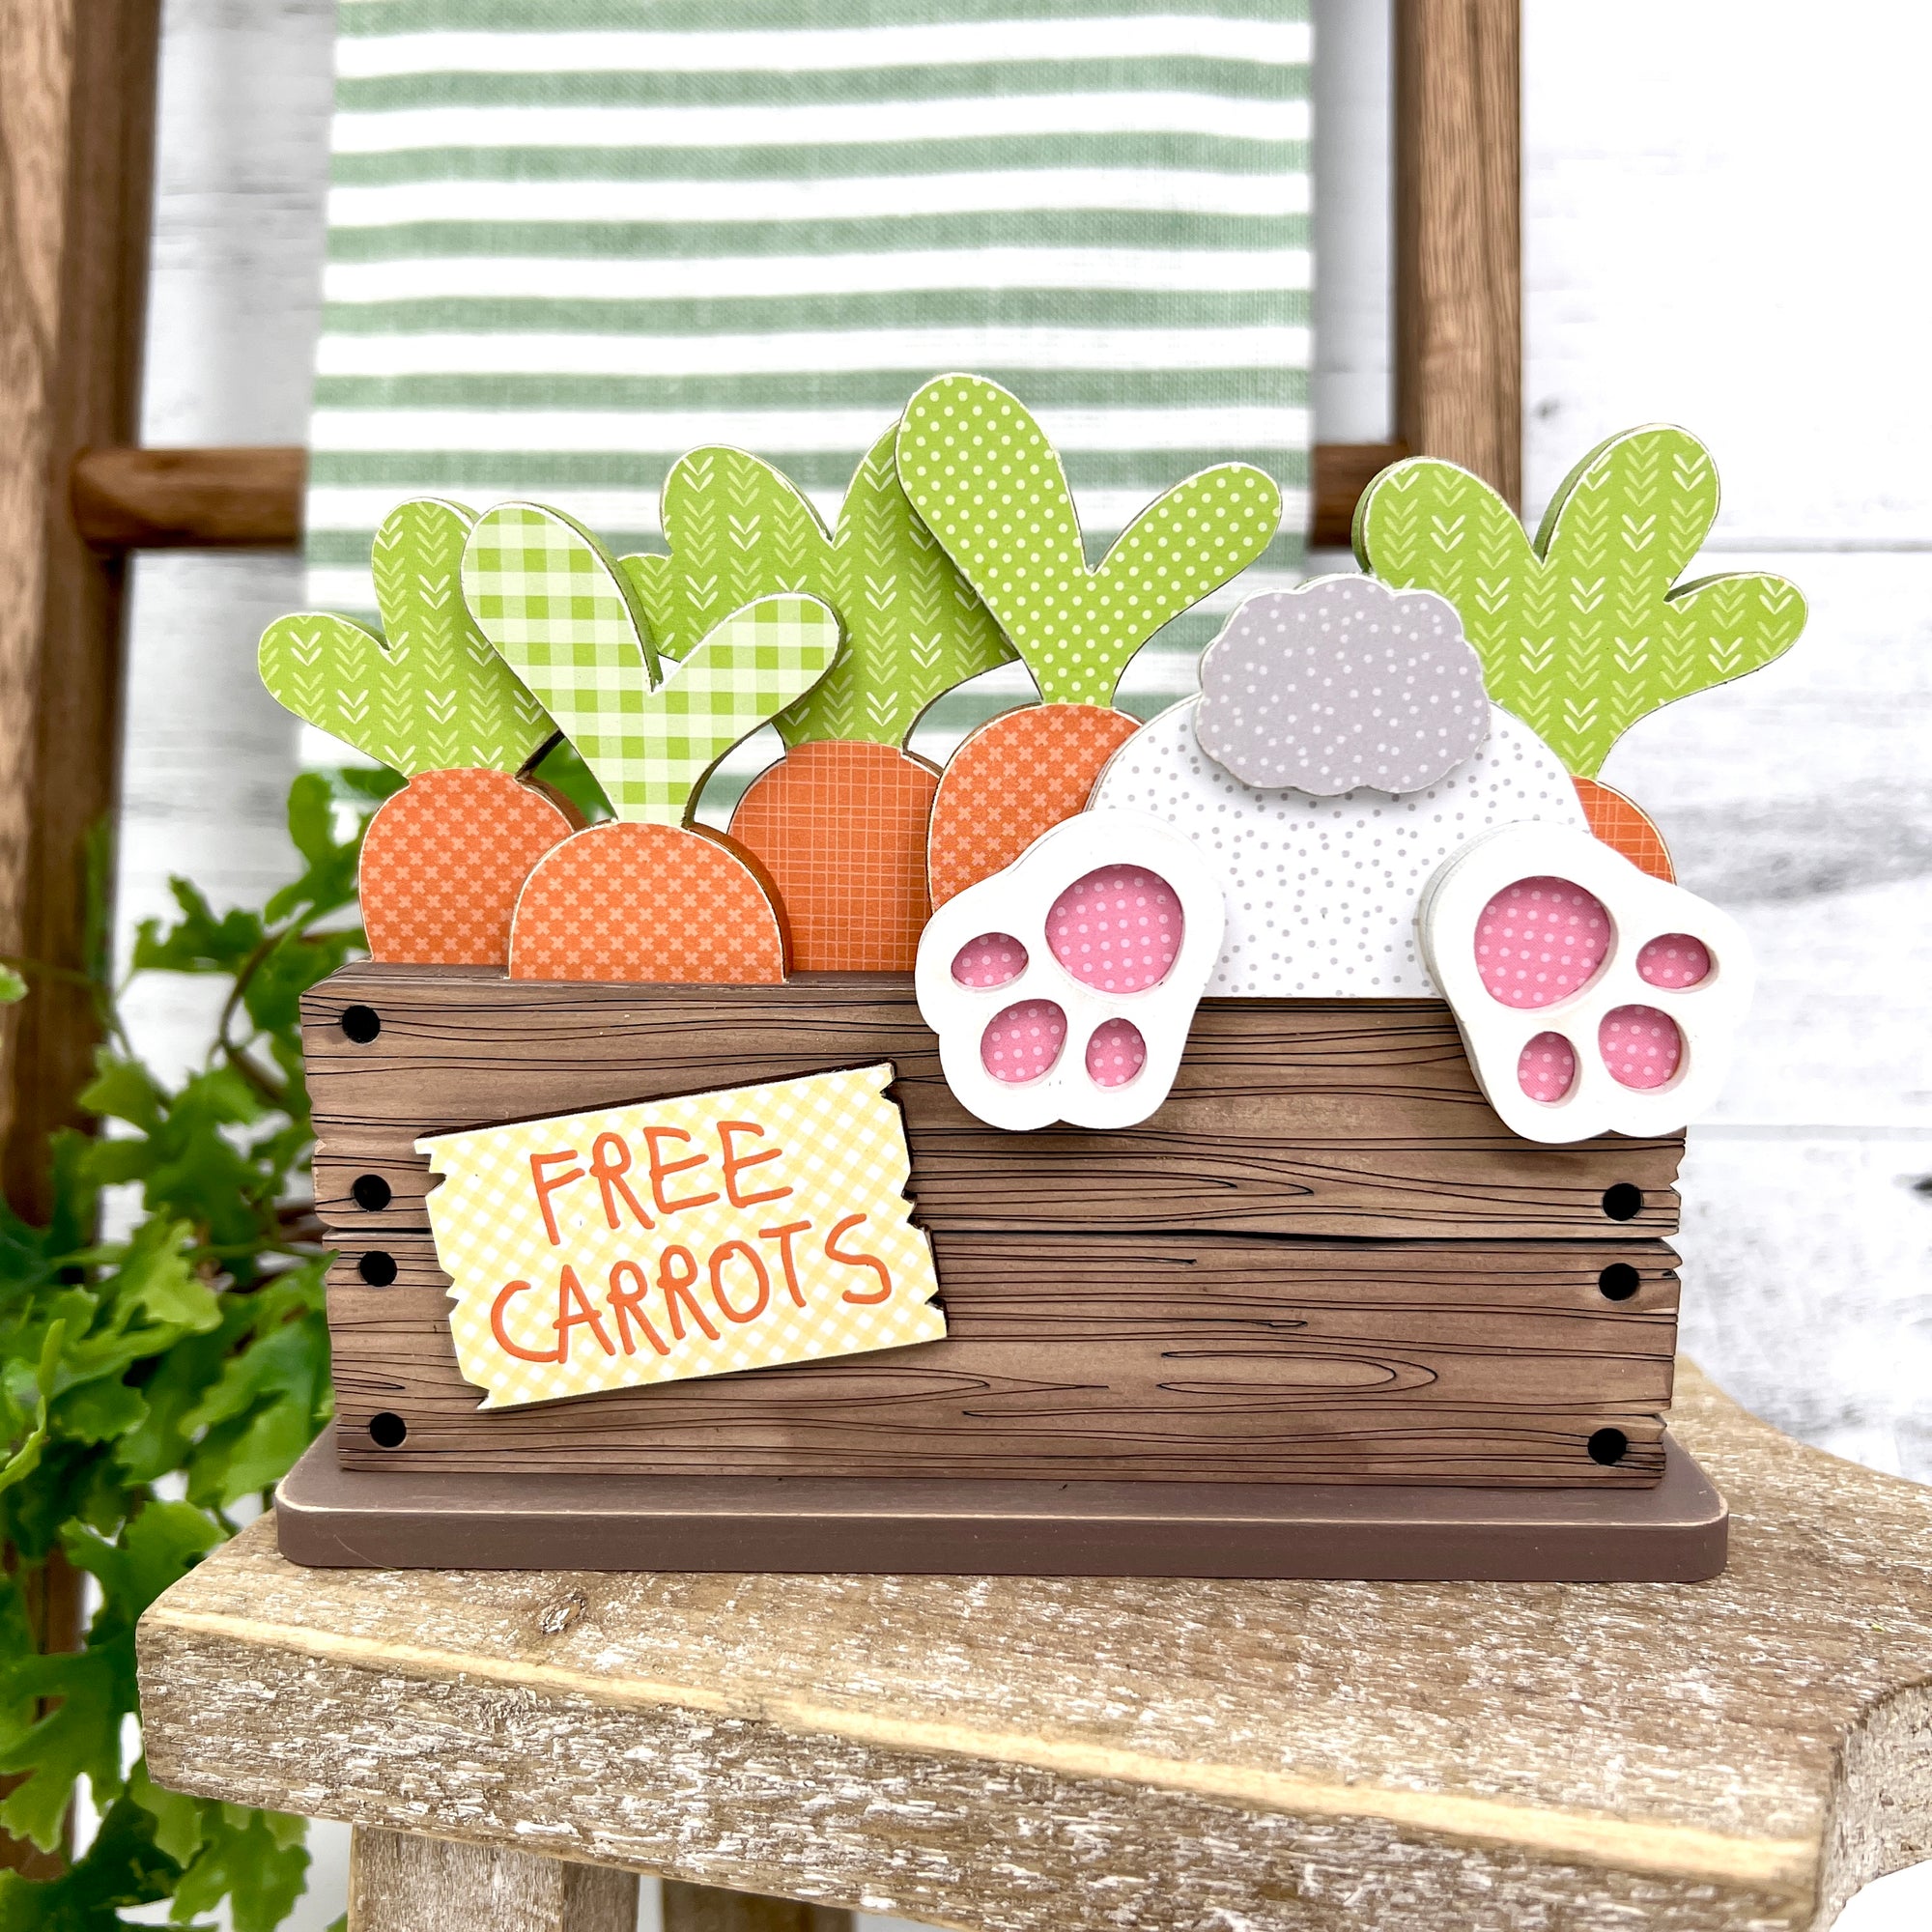 Free carrots bunny crate wood decor kit